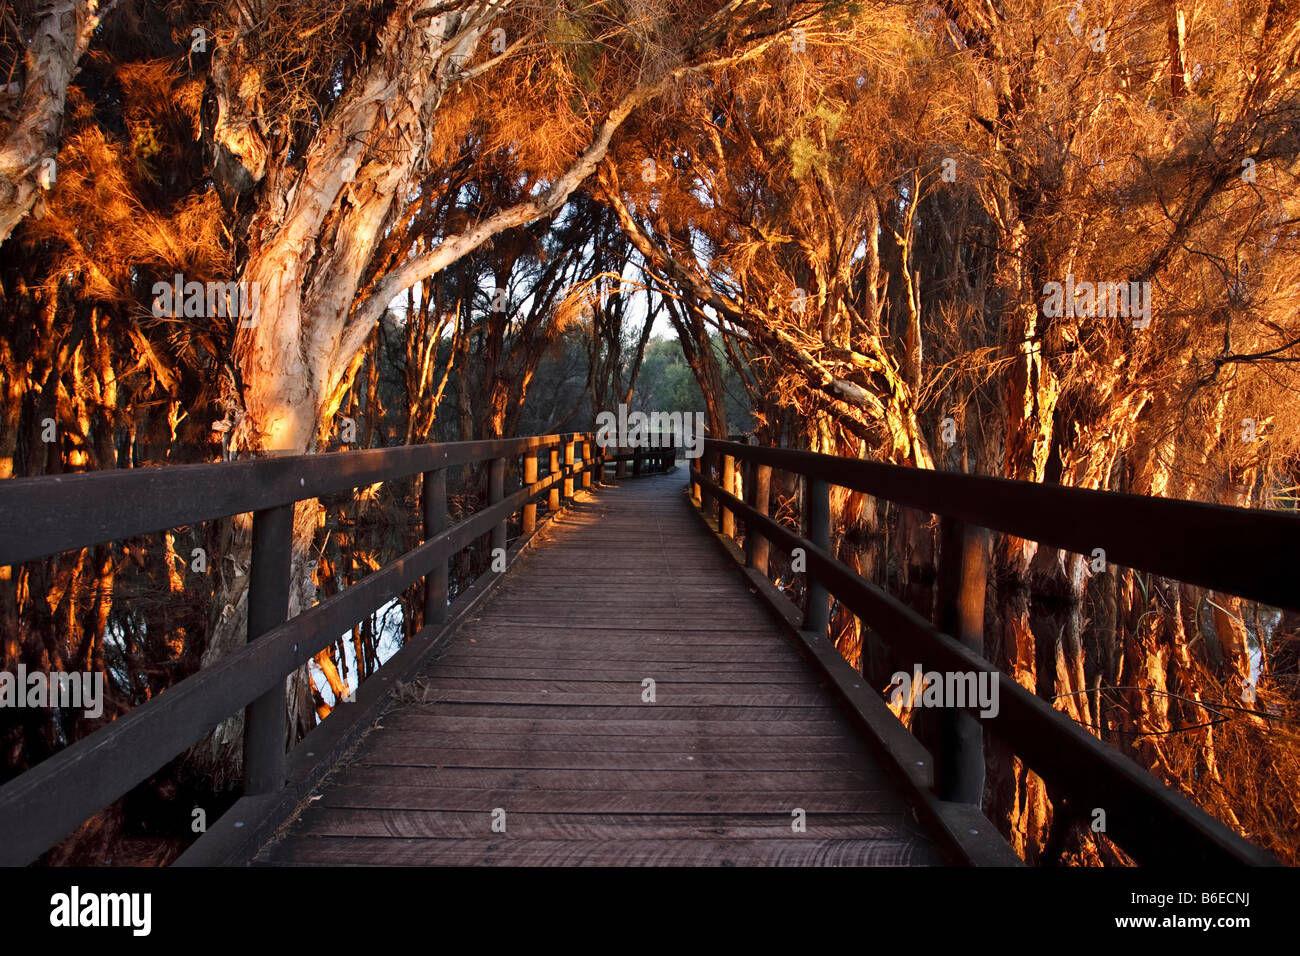 The Olive Seymour Boardwalk through Swamp Paperbarks at Herdsman Lake Regional Park in Perth, Western Australia Stock Photo